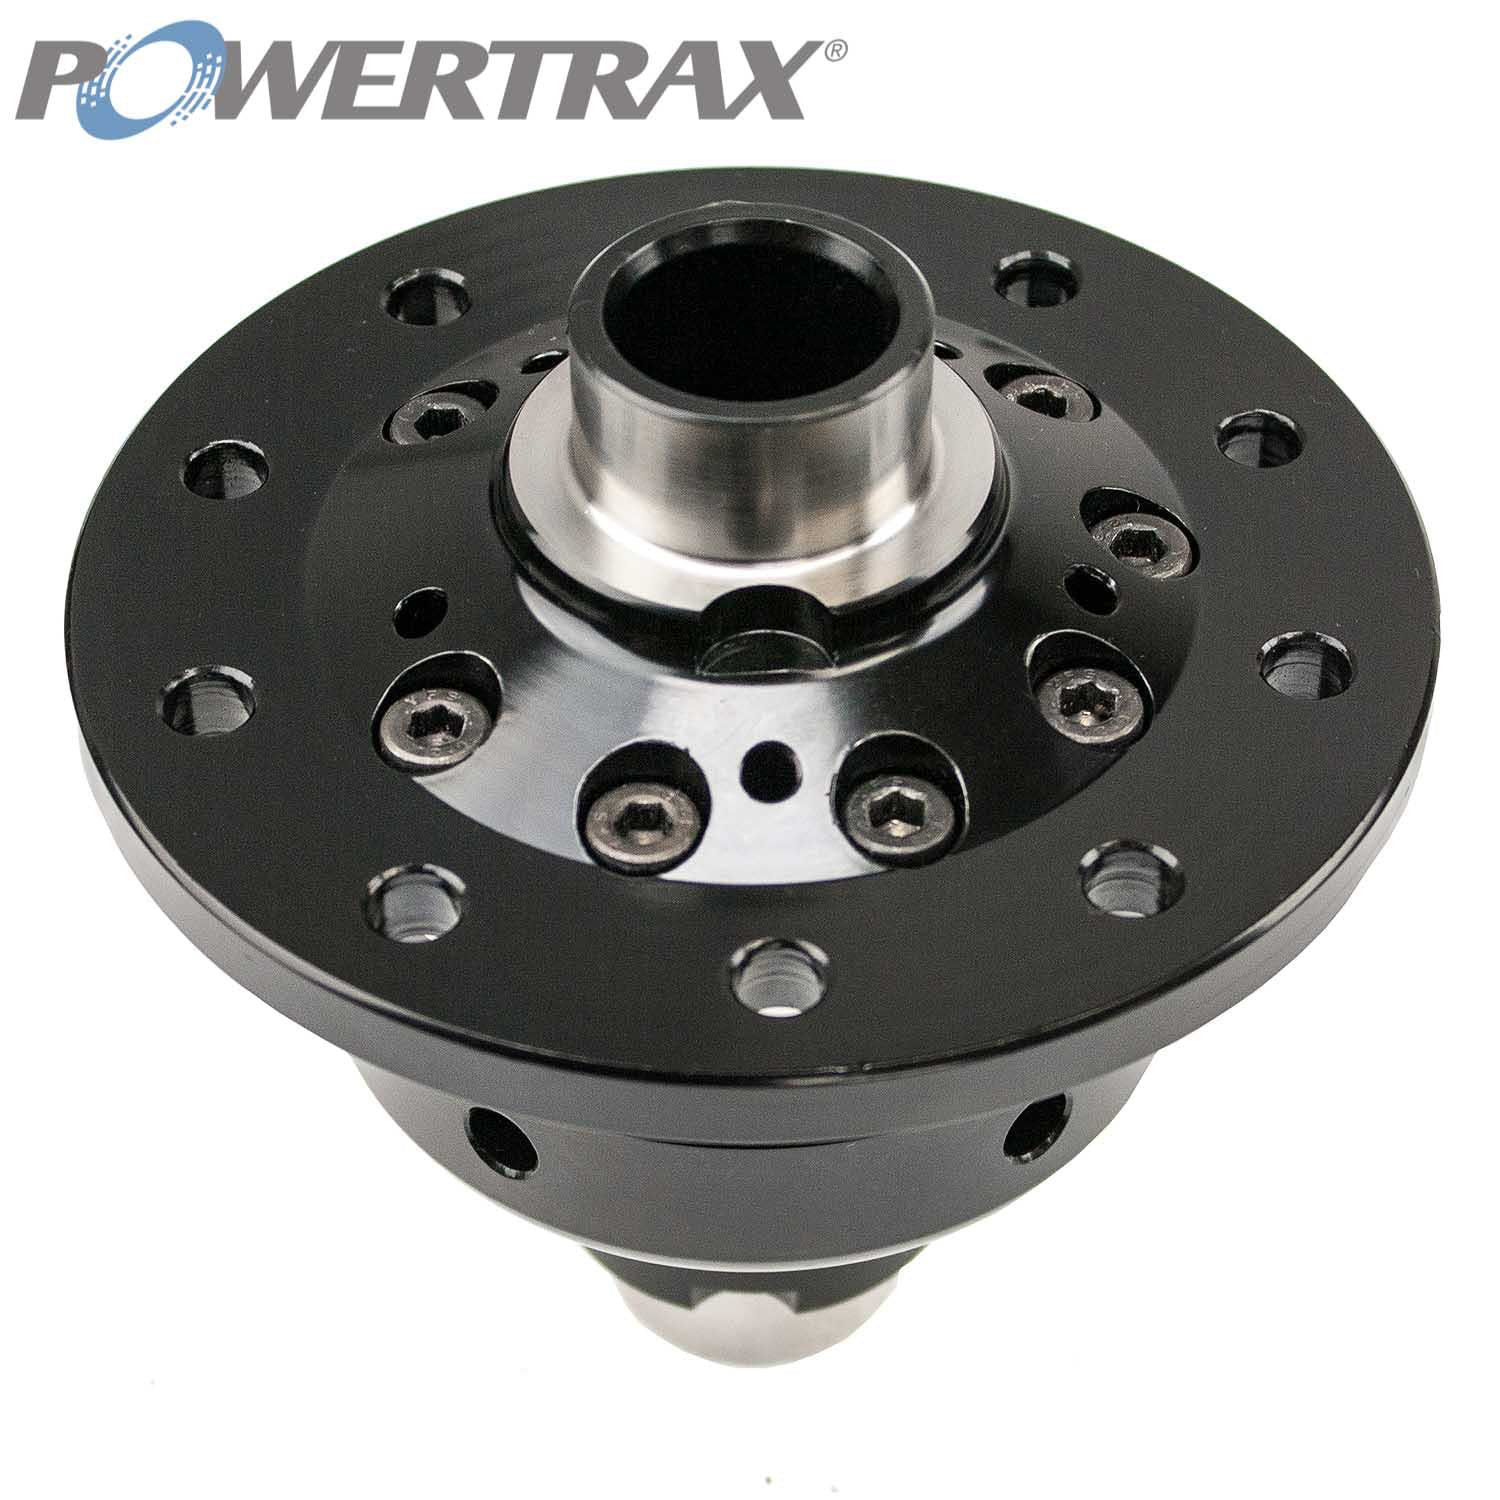 PowerTrax GT443027 Powertrax - Grip PRO Traction System